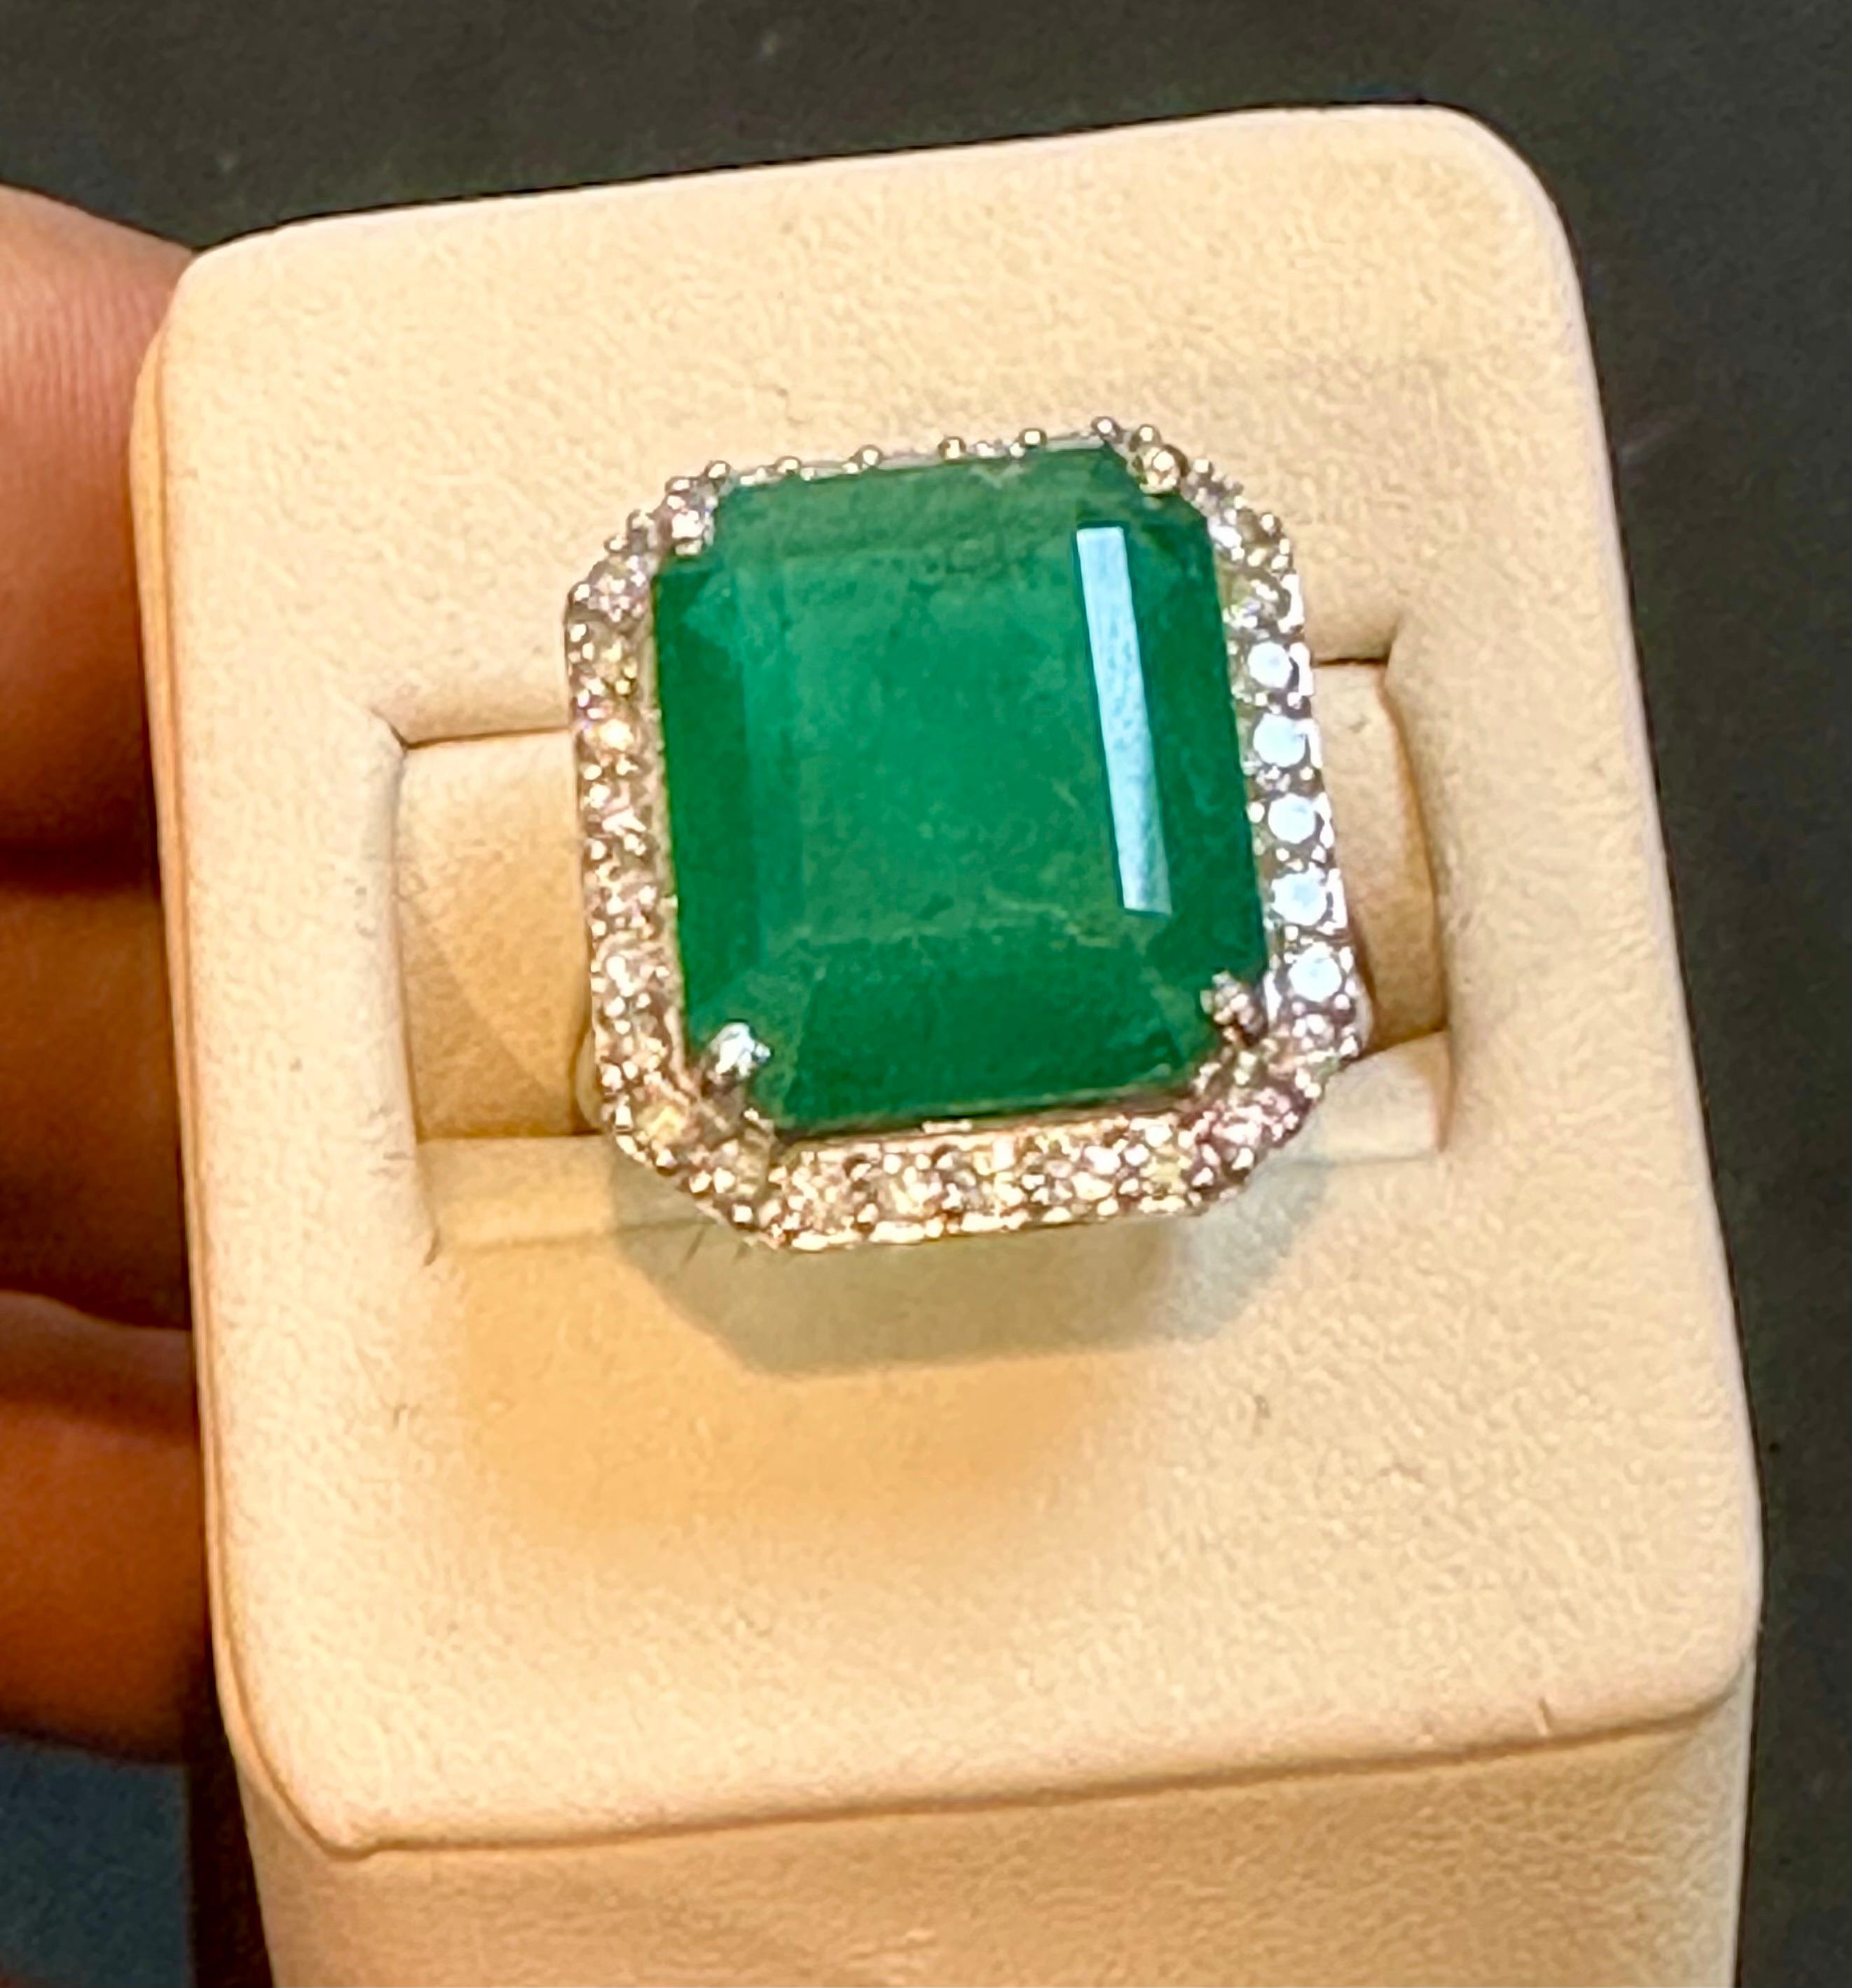 Natural 13 Carat Emerald Cut Zambian Emerald & Diamond Ring in 14kt White Gold For Sale 1